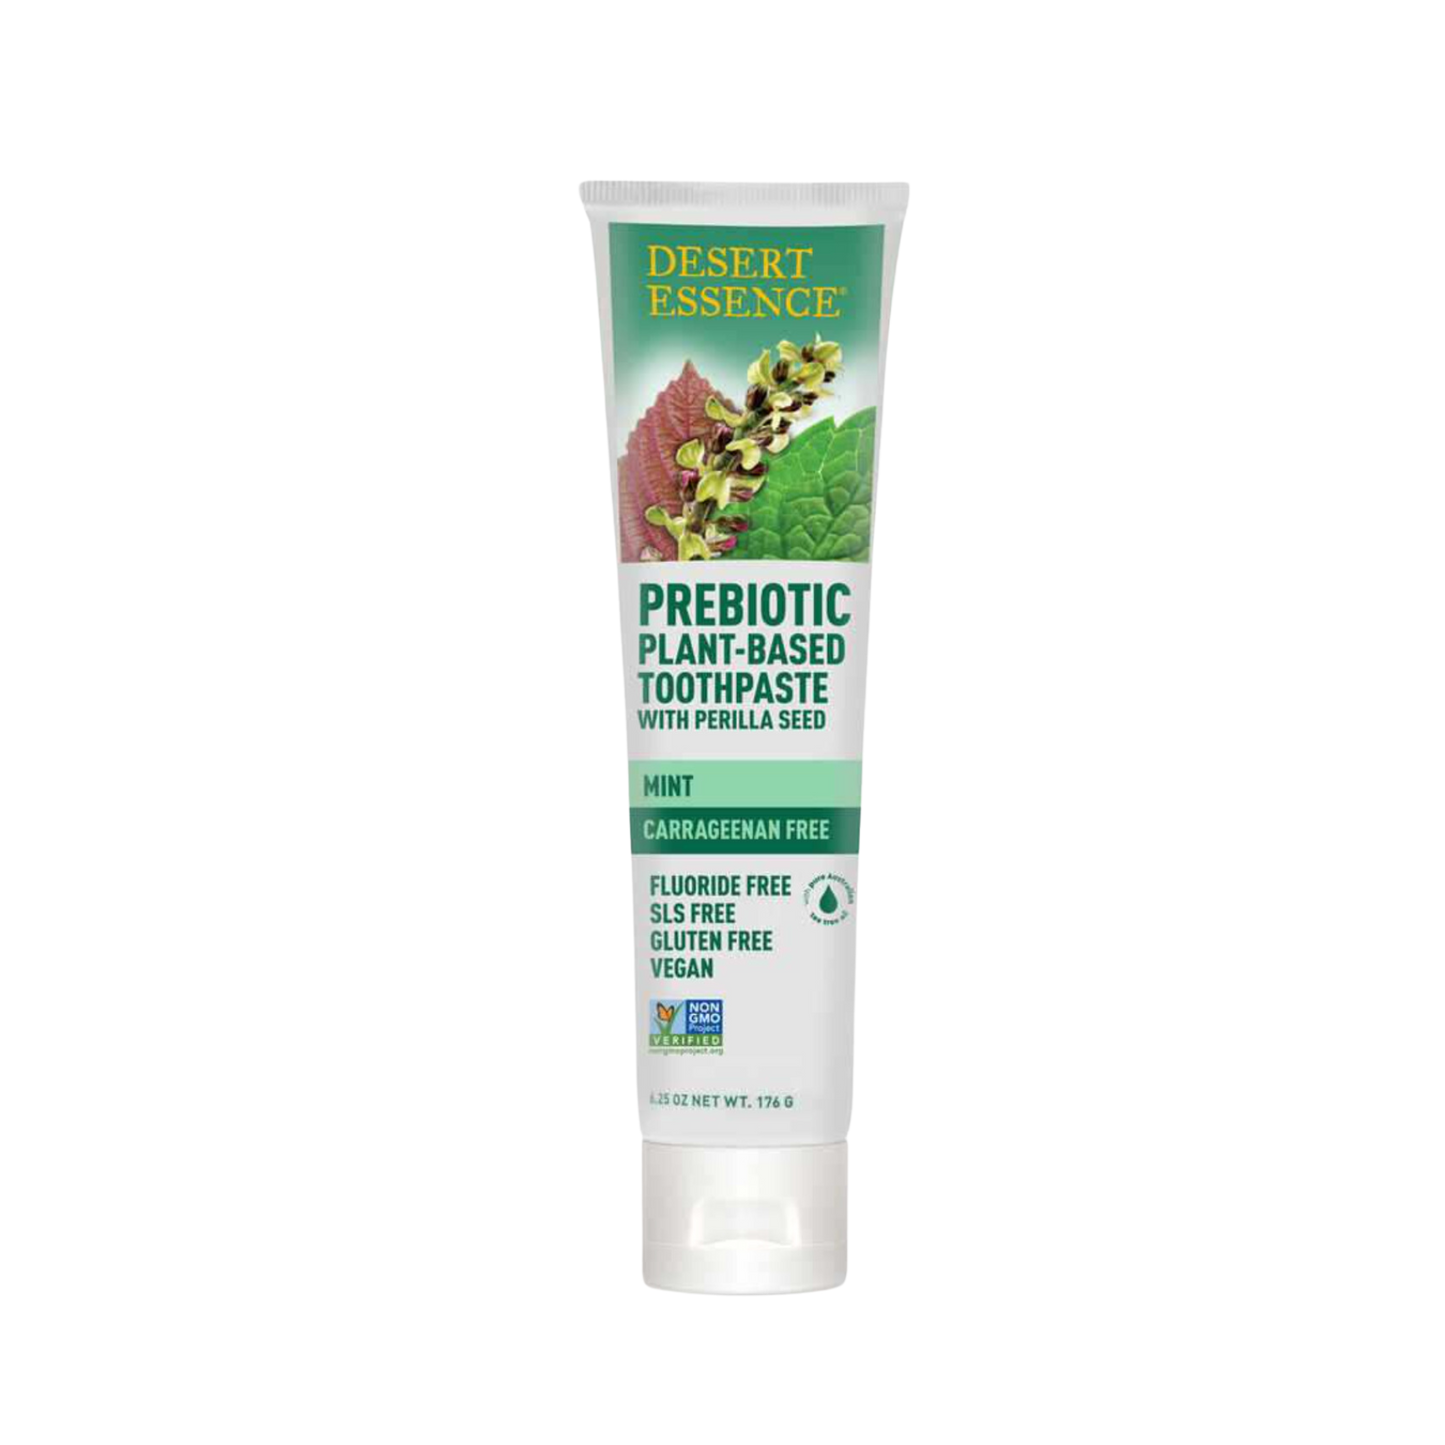 Desert Essence Prebiotic Plant-Based Mint Toothpaste